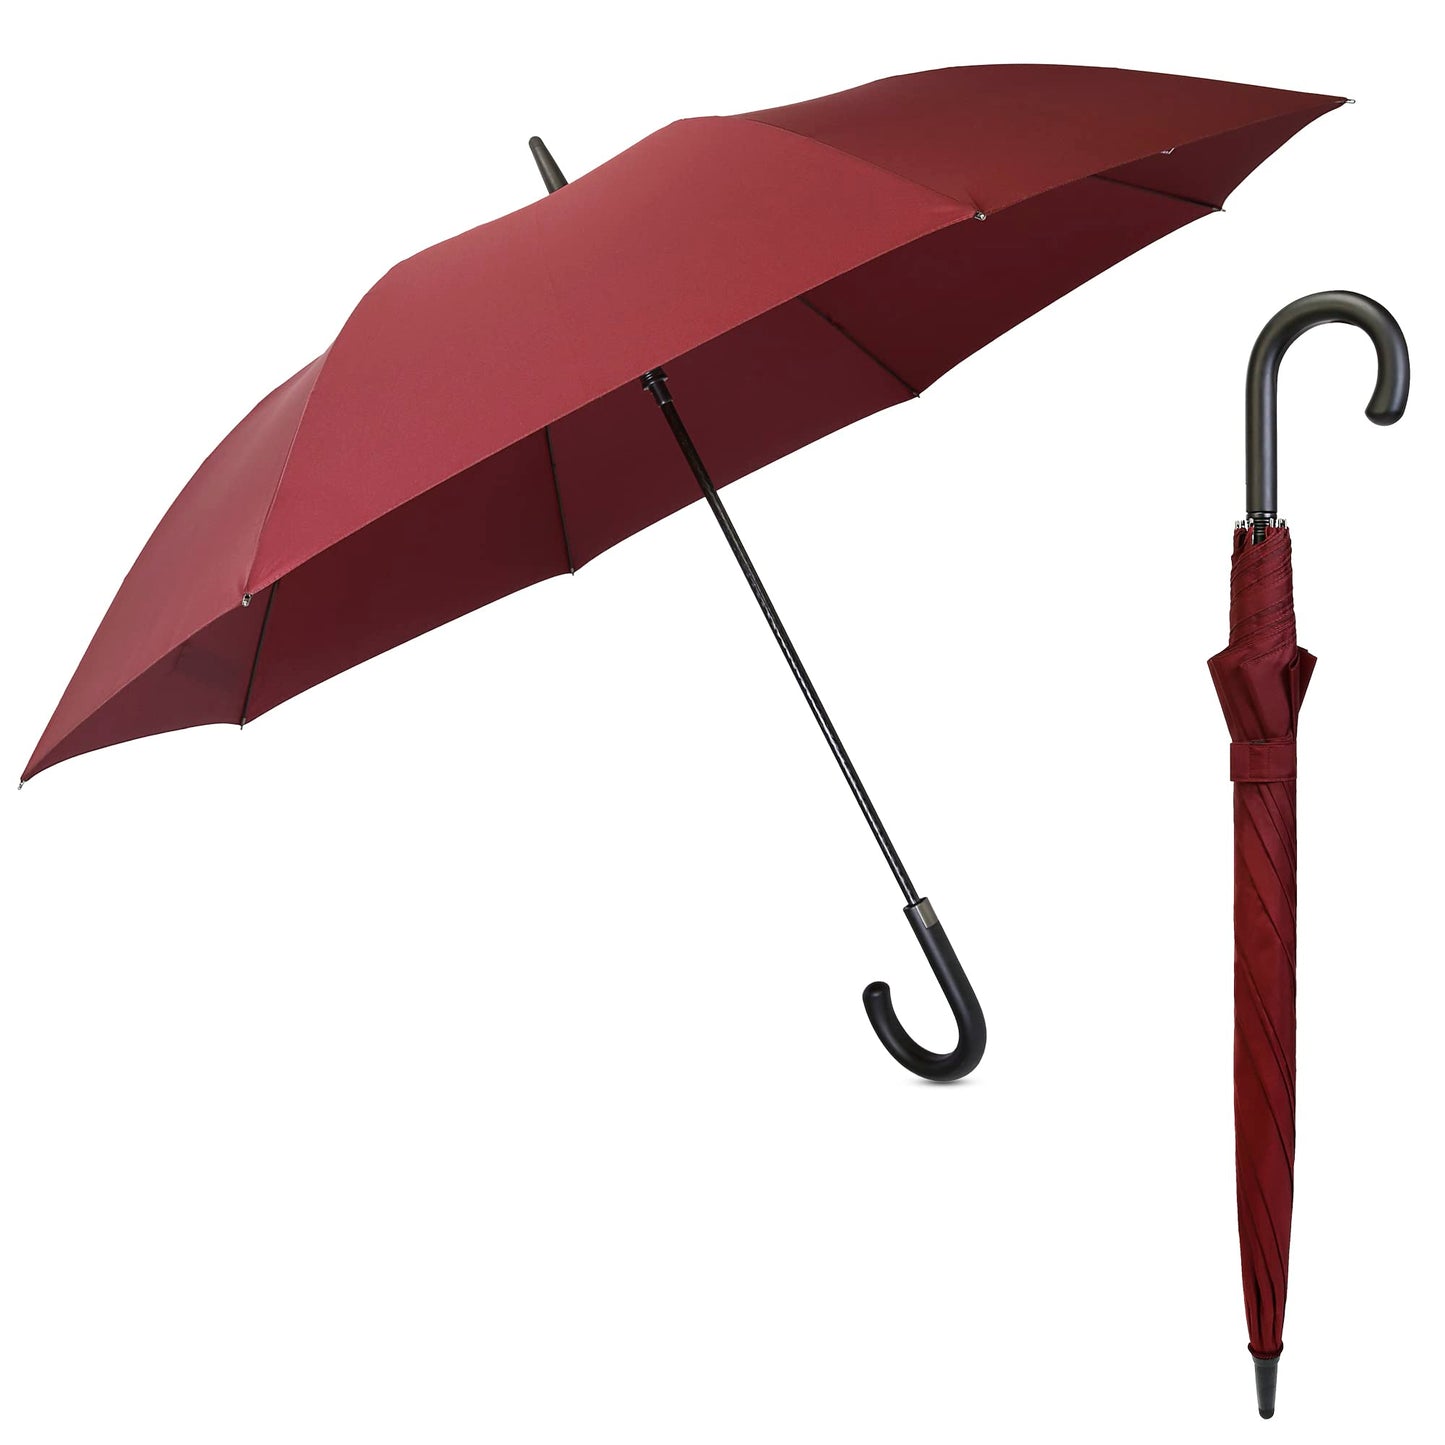 THE CLOWNFISH Umbrella Celebrity Series Single Fold Auto Open J- shape Handle Waterproof Pongee Umbrellas For Men and Women (Maroon)